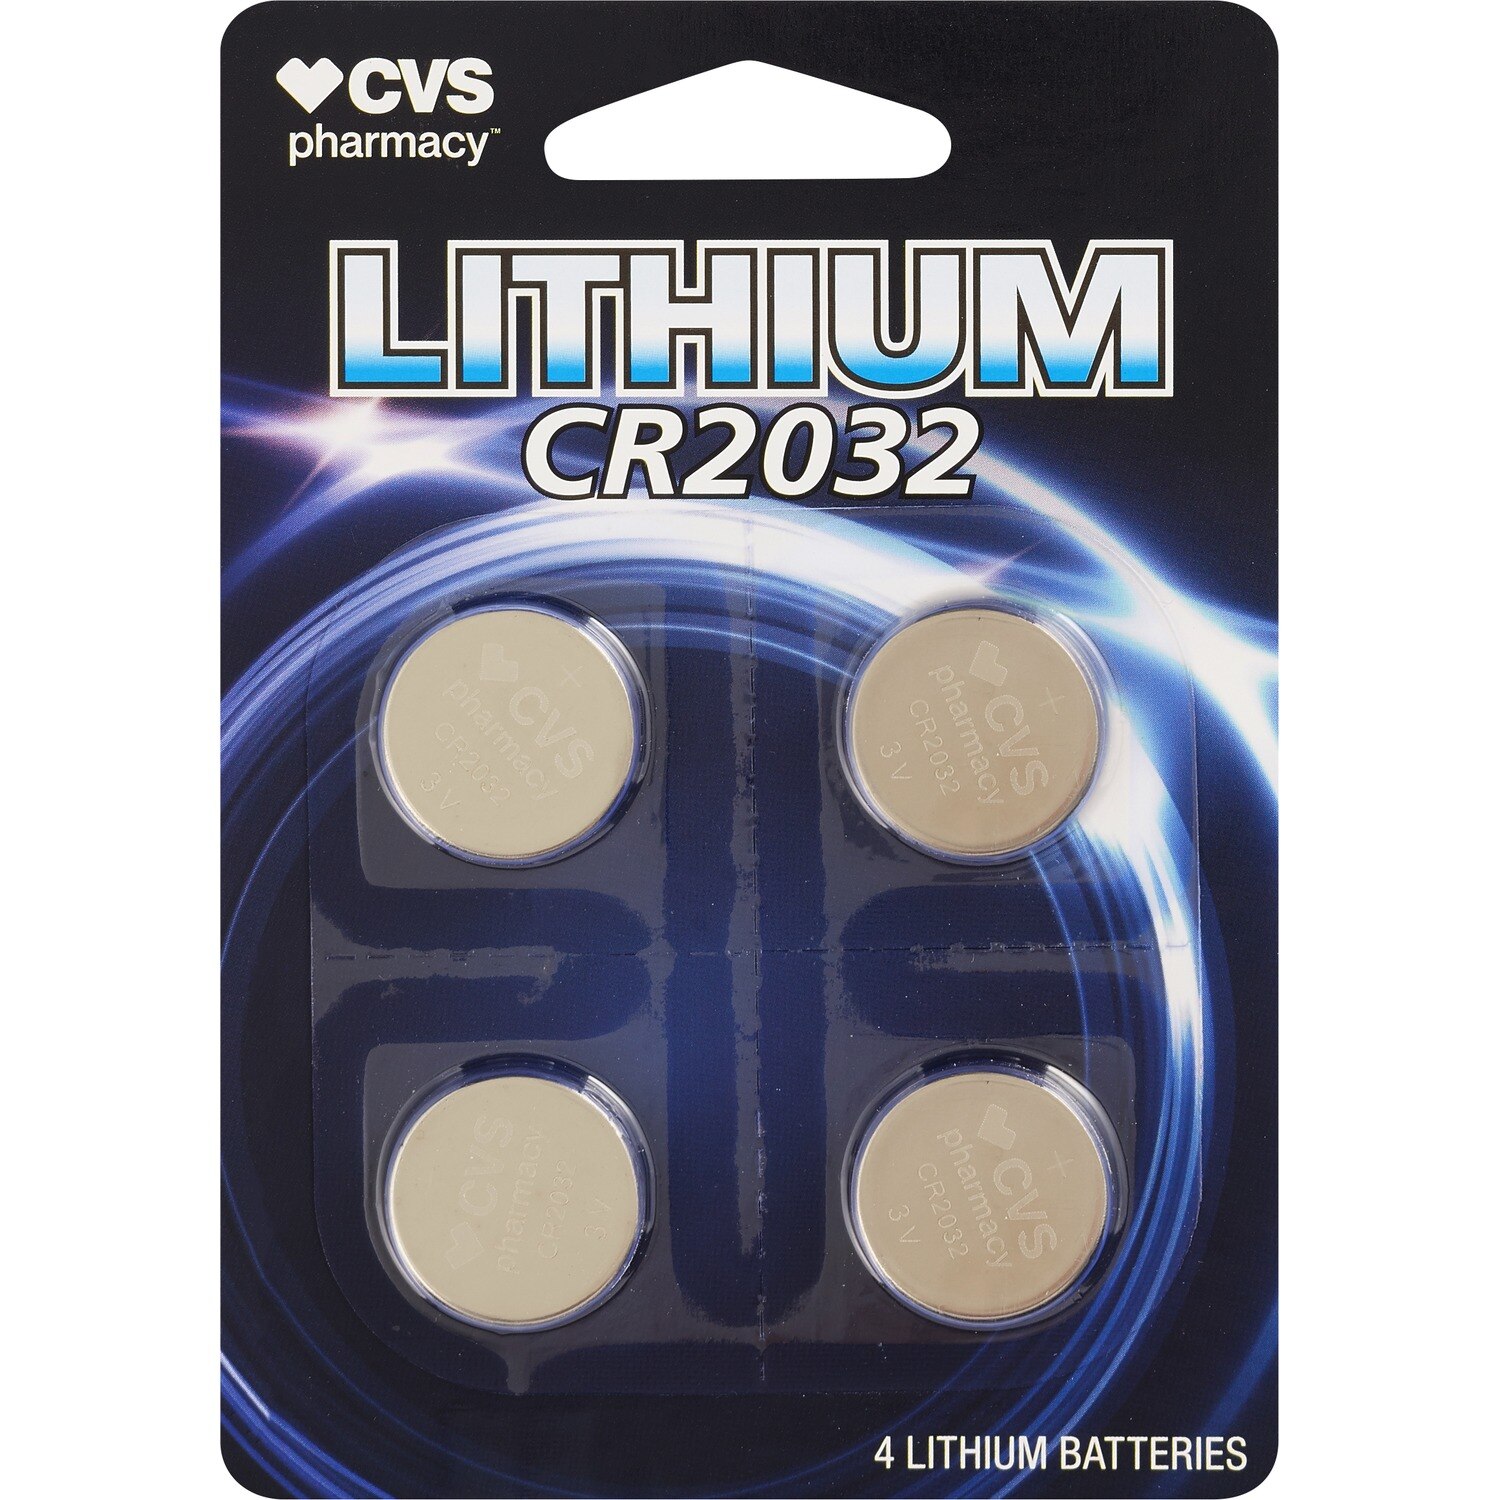 CVS Lithium CR2032 Batteries